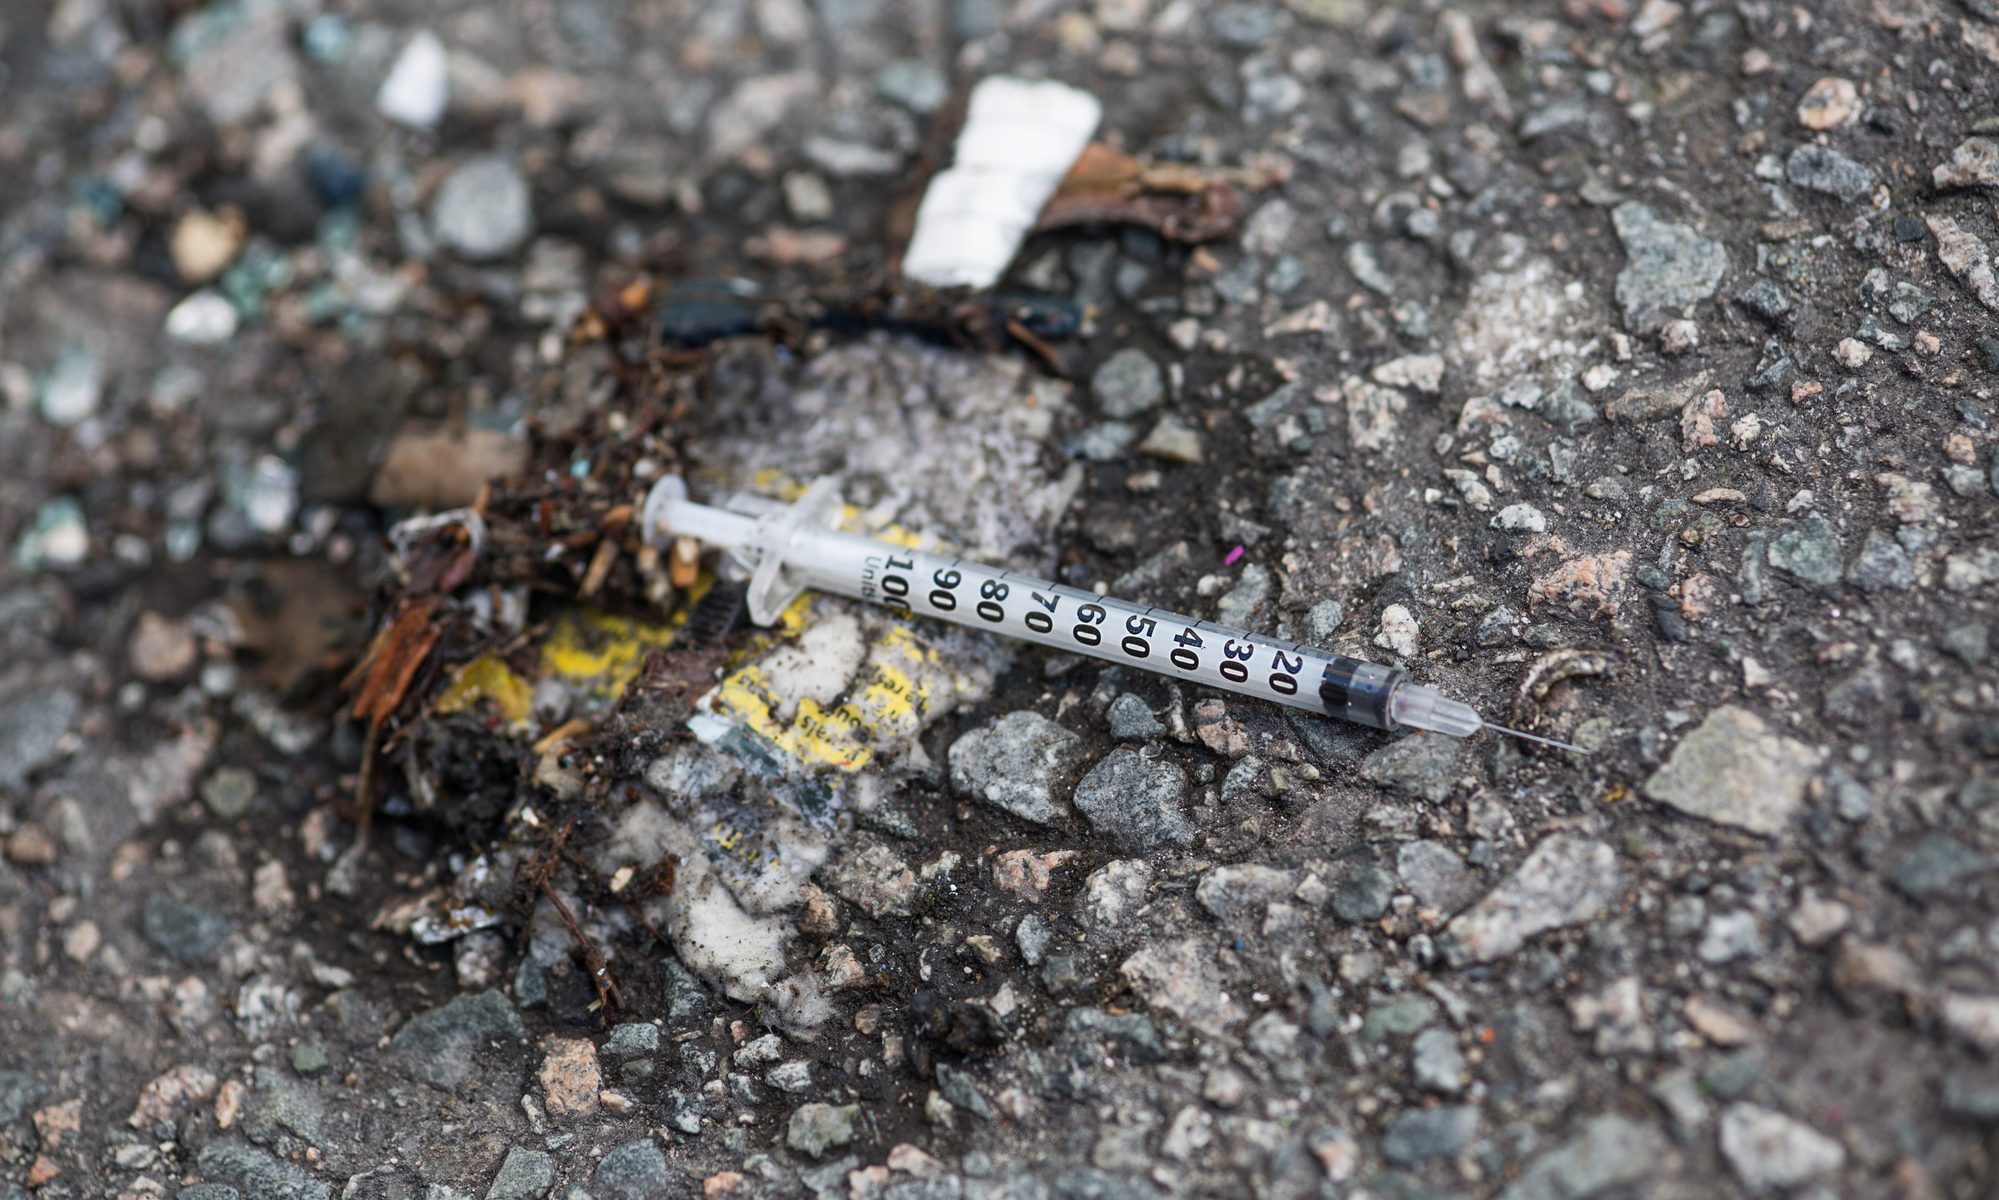 photograph of discarded syringe on asphalt